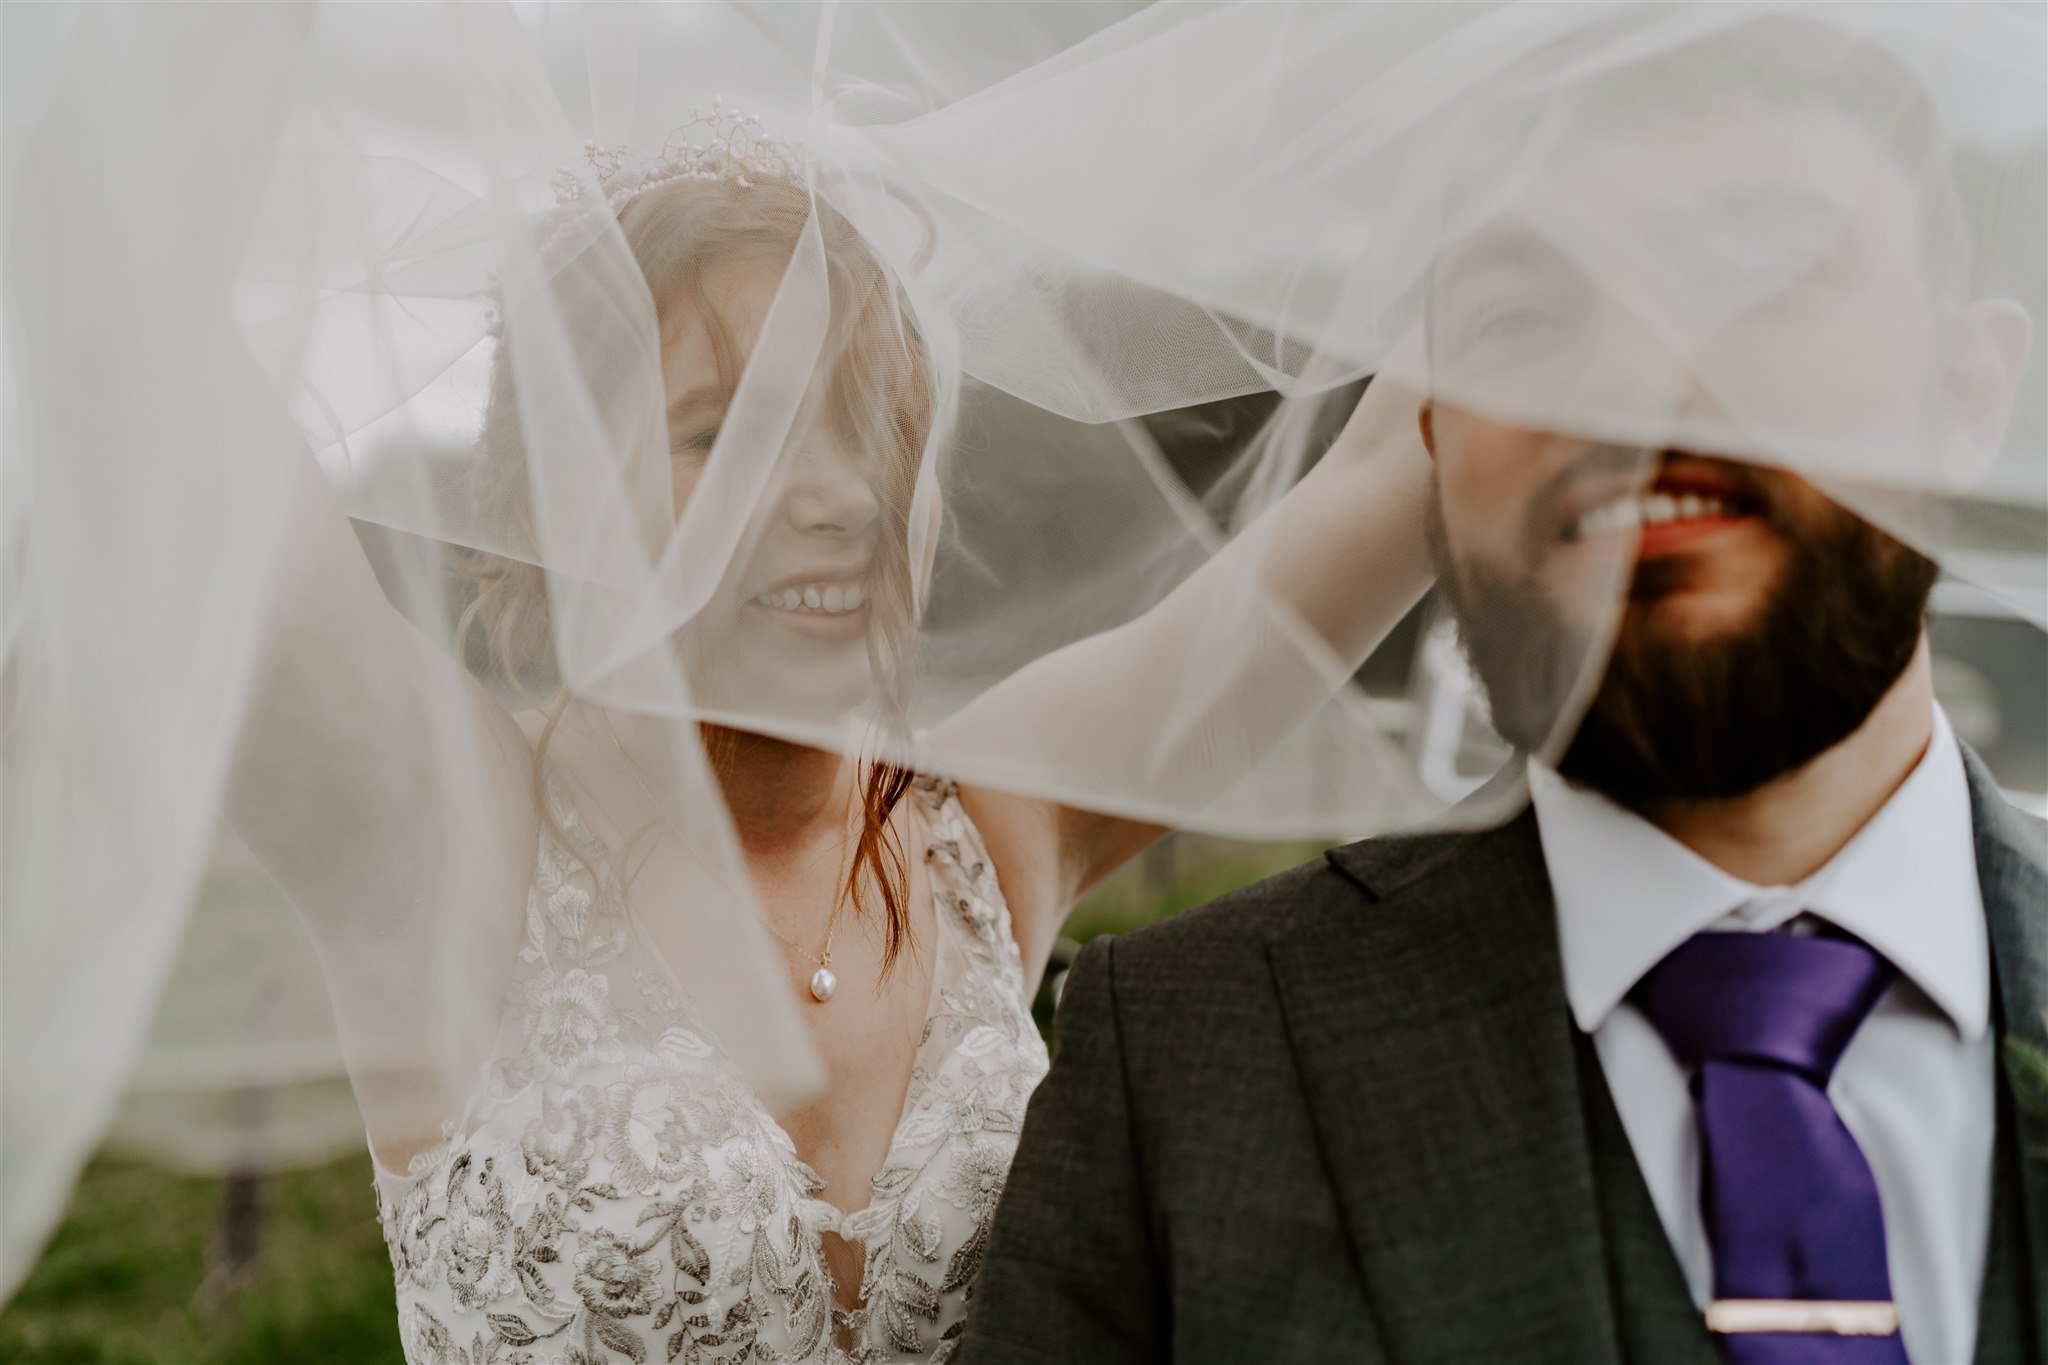 wedding veil blowing in wind over bride groom Stamford wedding photographer